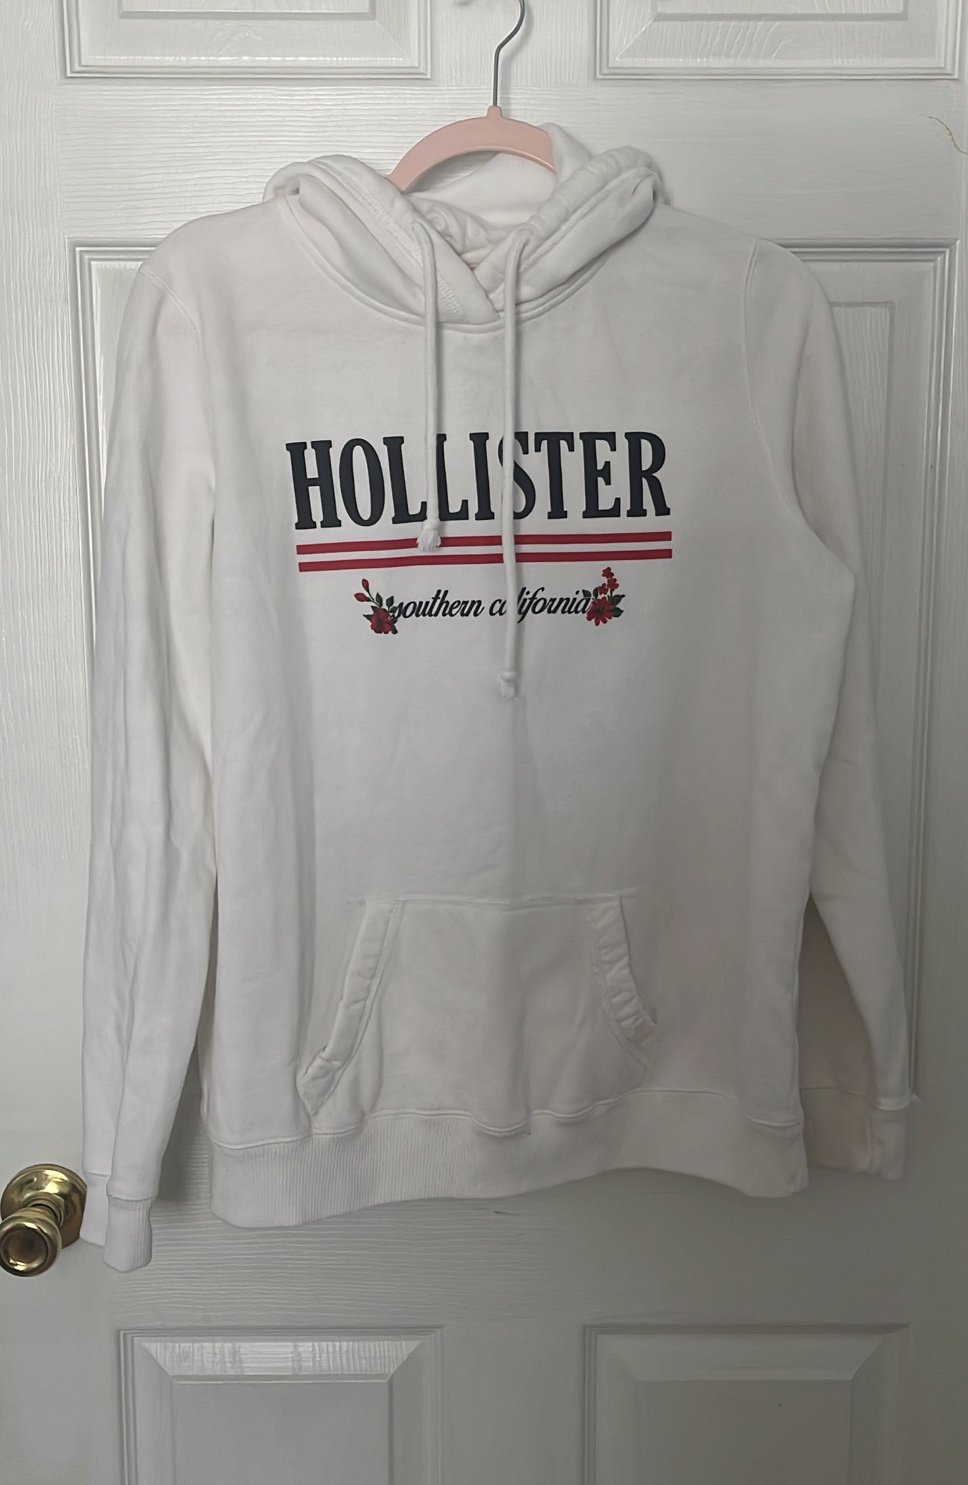 Buy Hollister hoodie MO2c9vX6w Online Exclusive